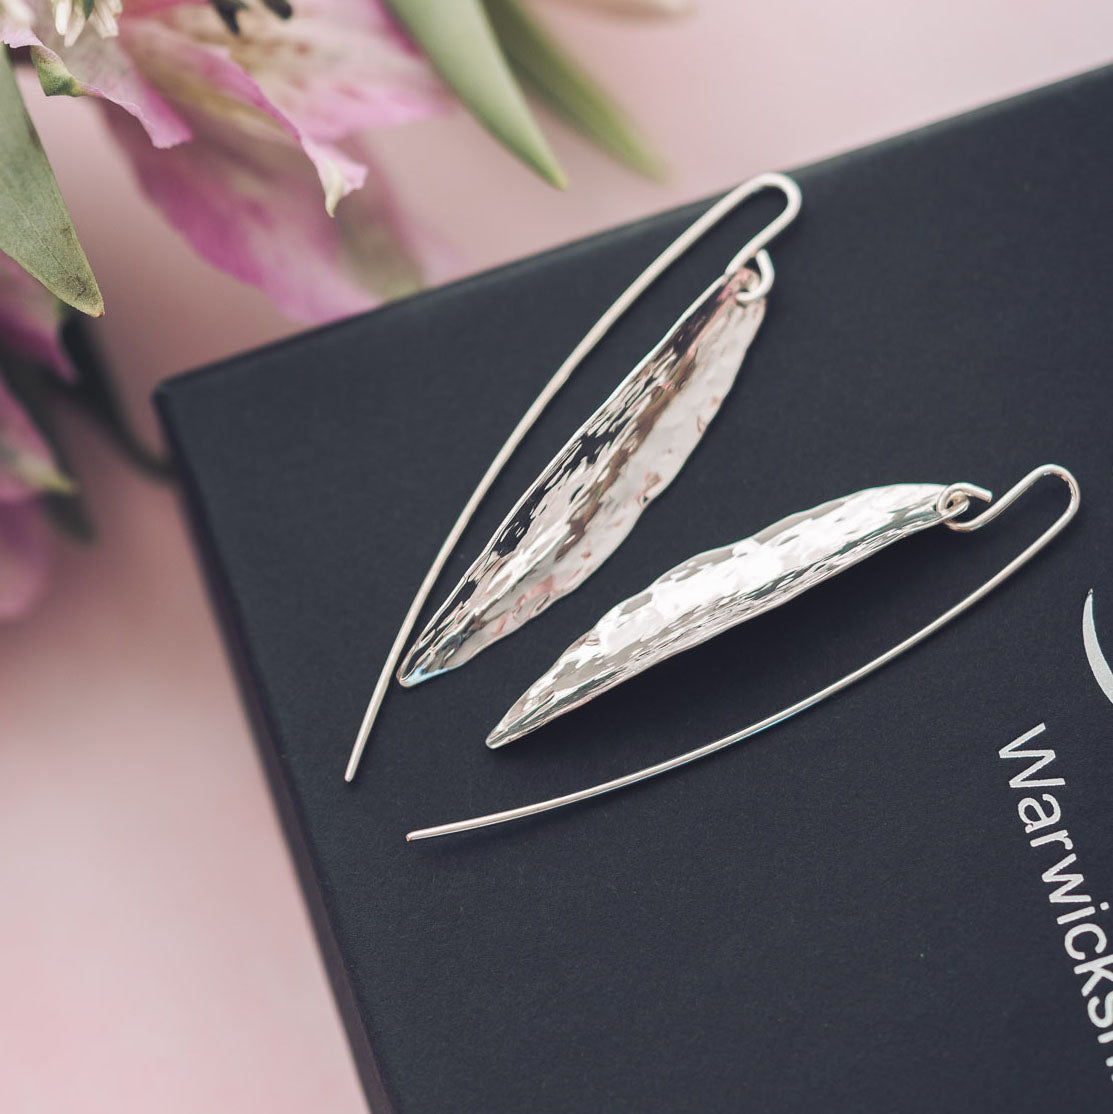 Handmade Delicate Silver Leaf Inspired Earrings